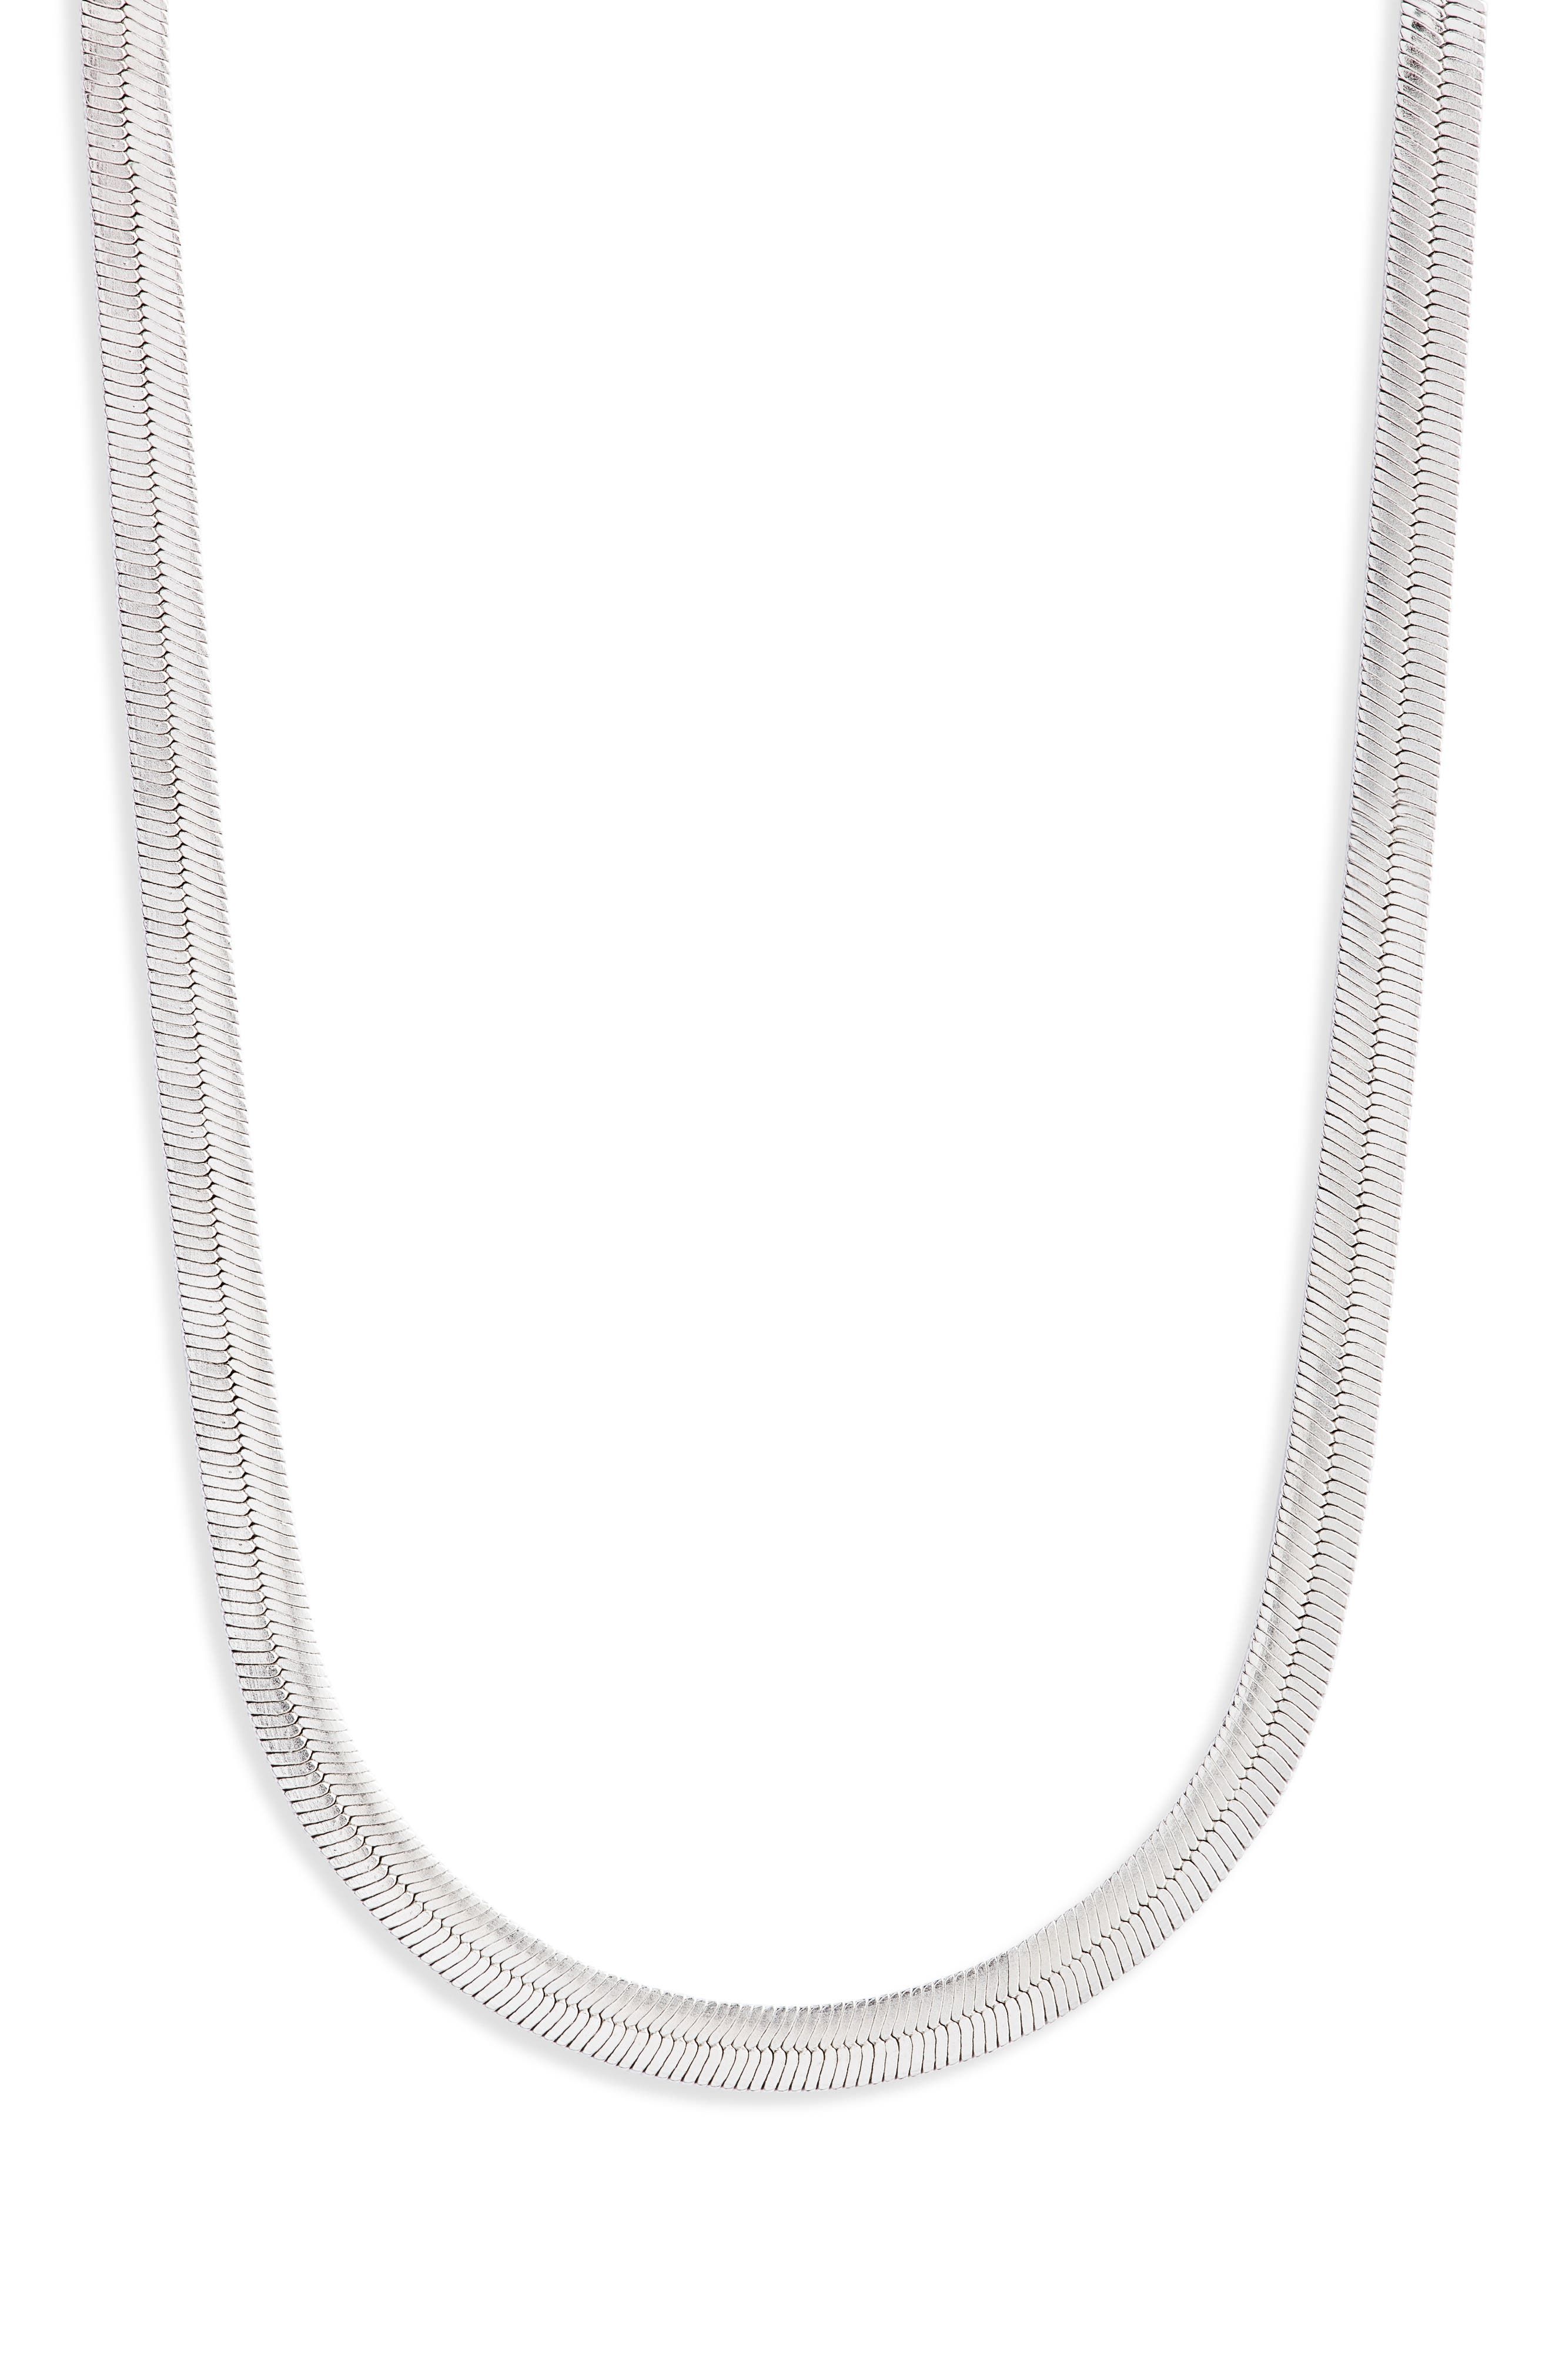 Curve Strand Open Choker Sterling Silver 925 Fashion Adjustable Plain Jewelry